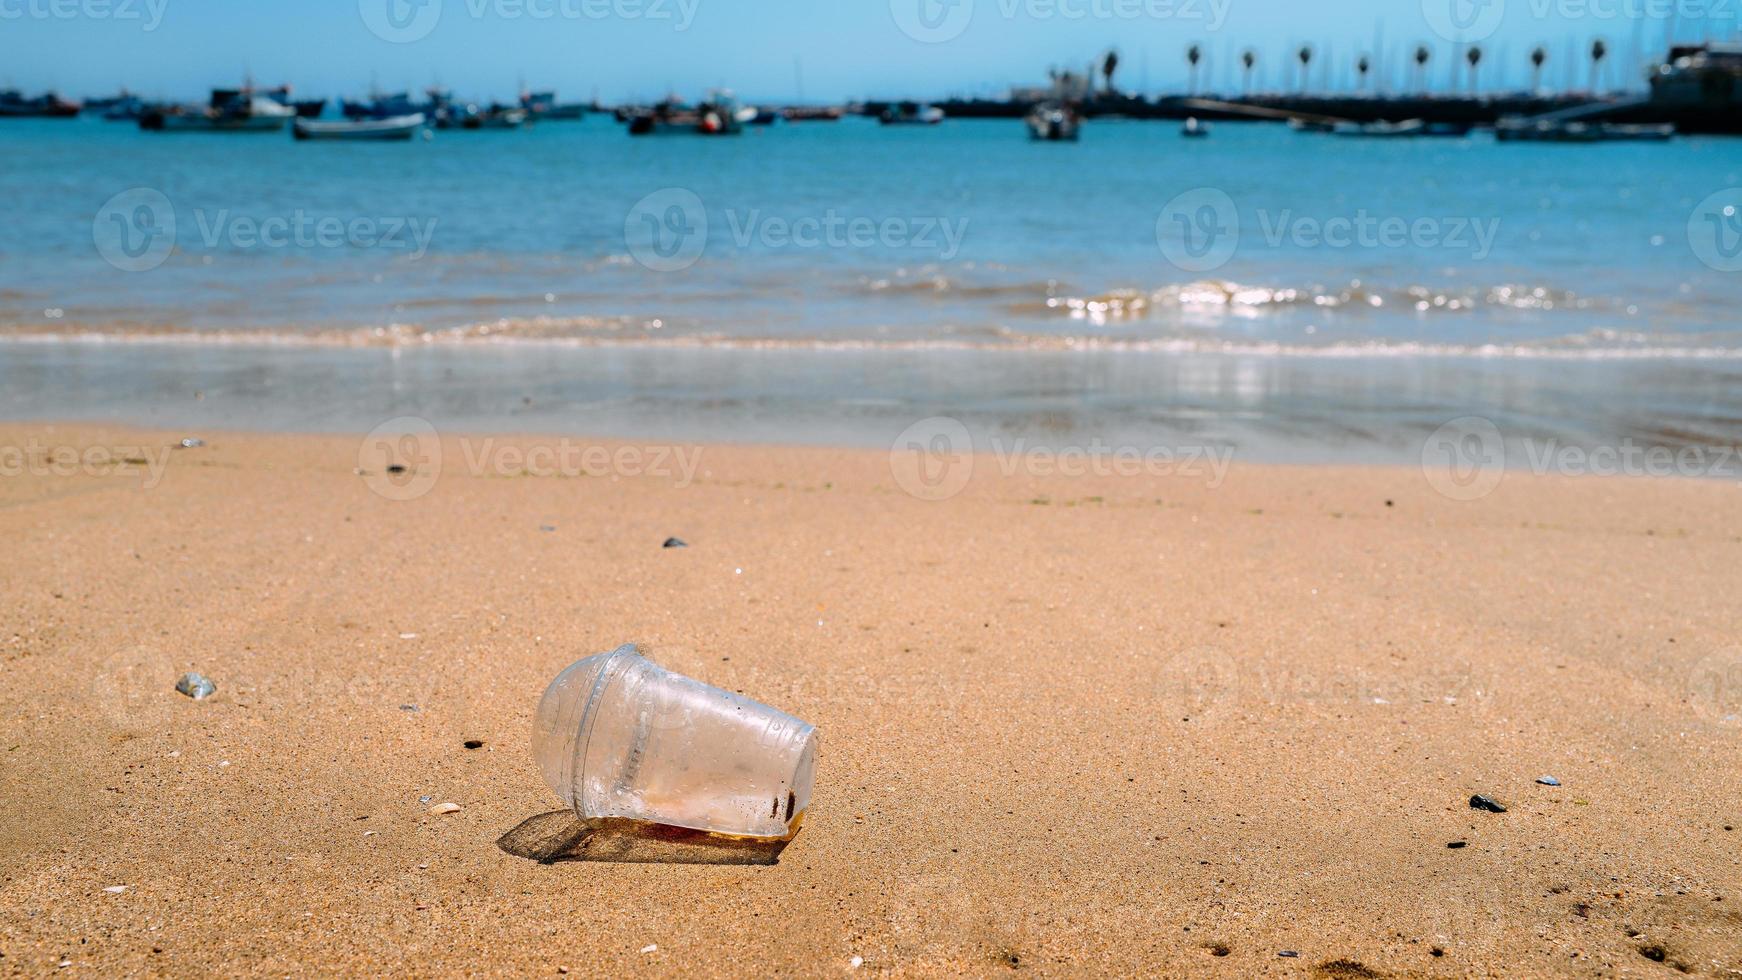 afval plastic beker achtergelaten op het strand maken vervuiling foto